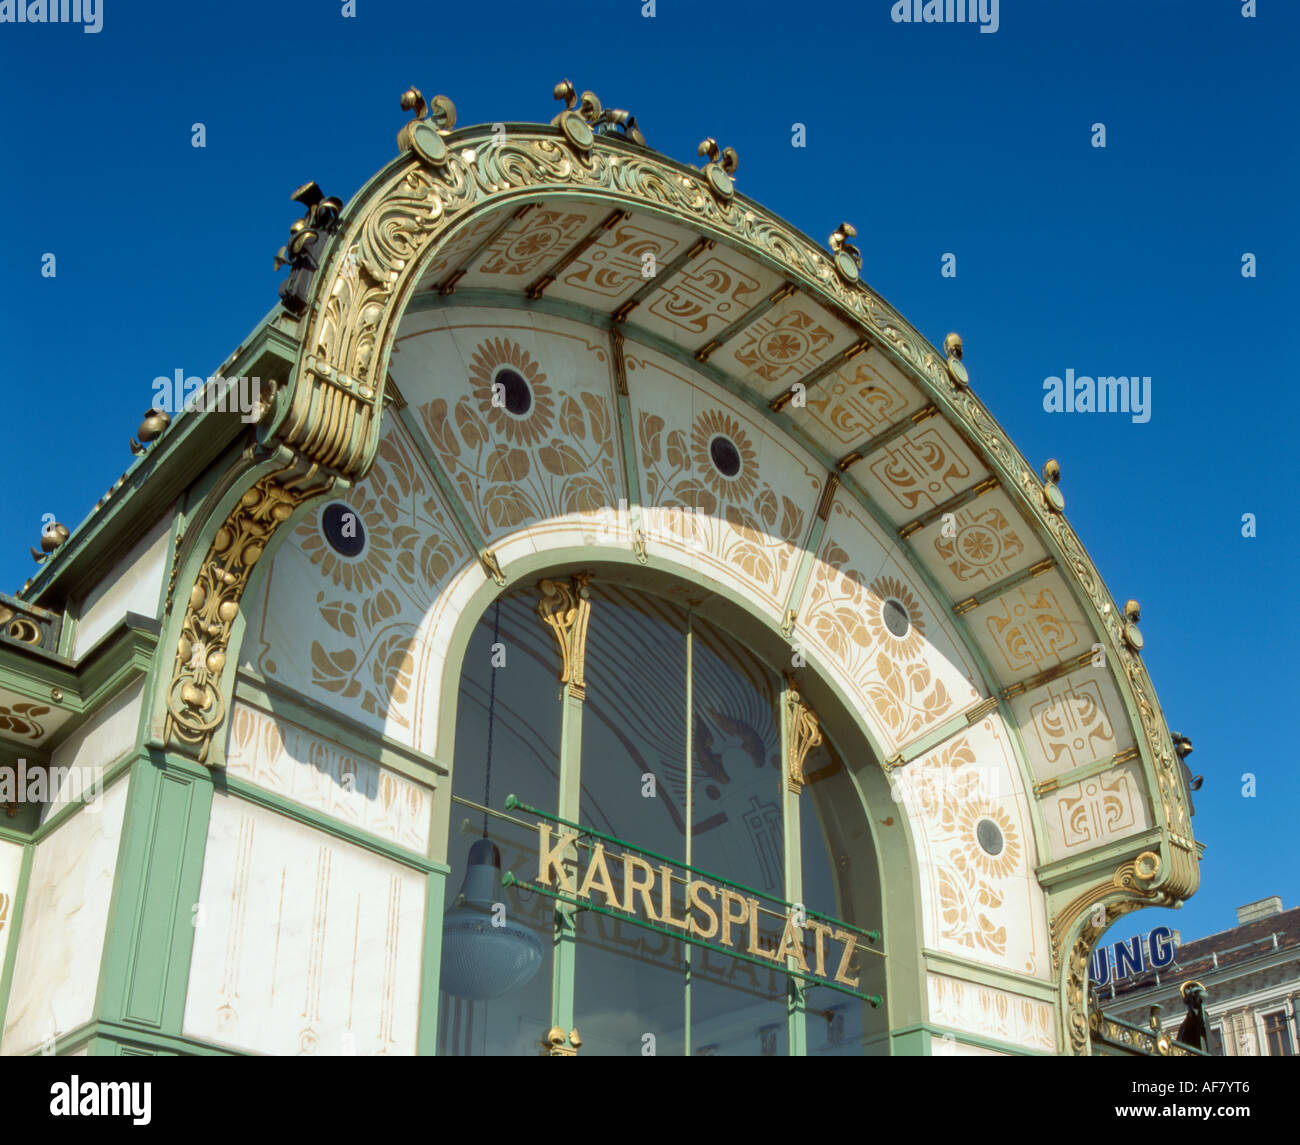 Otto Wagner's Karlsplatz pavilion, Vienna, Austria. Stock Photo